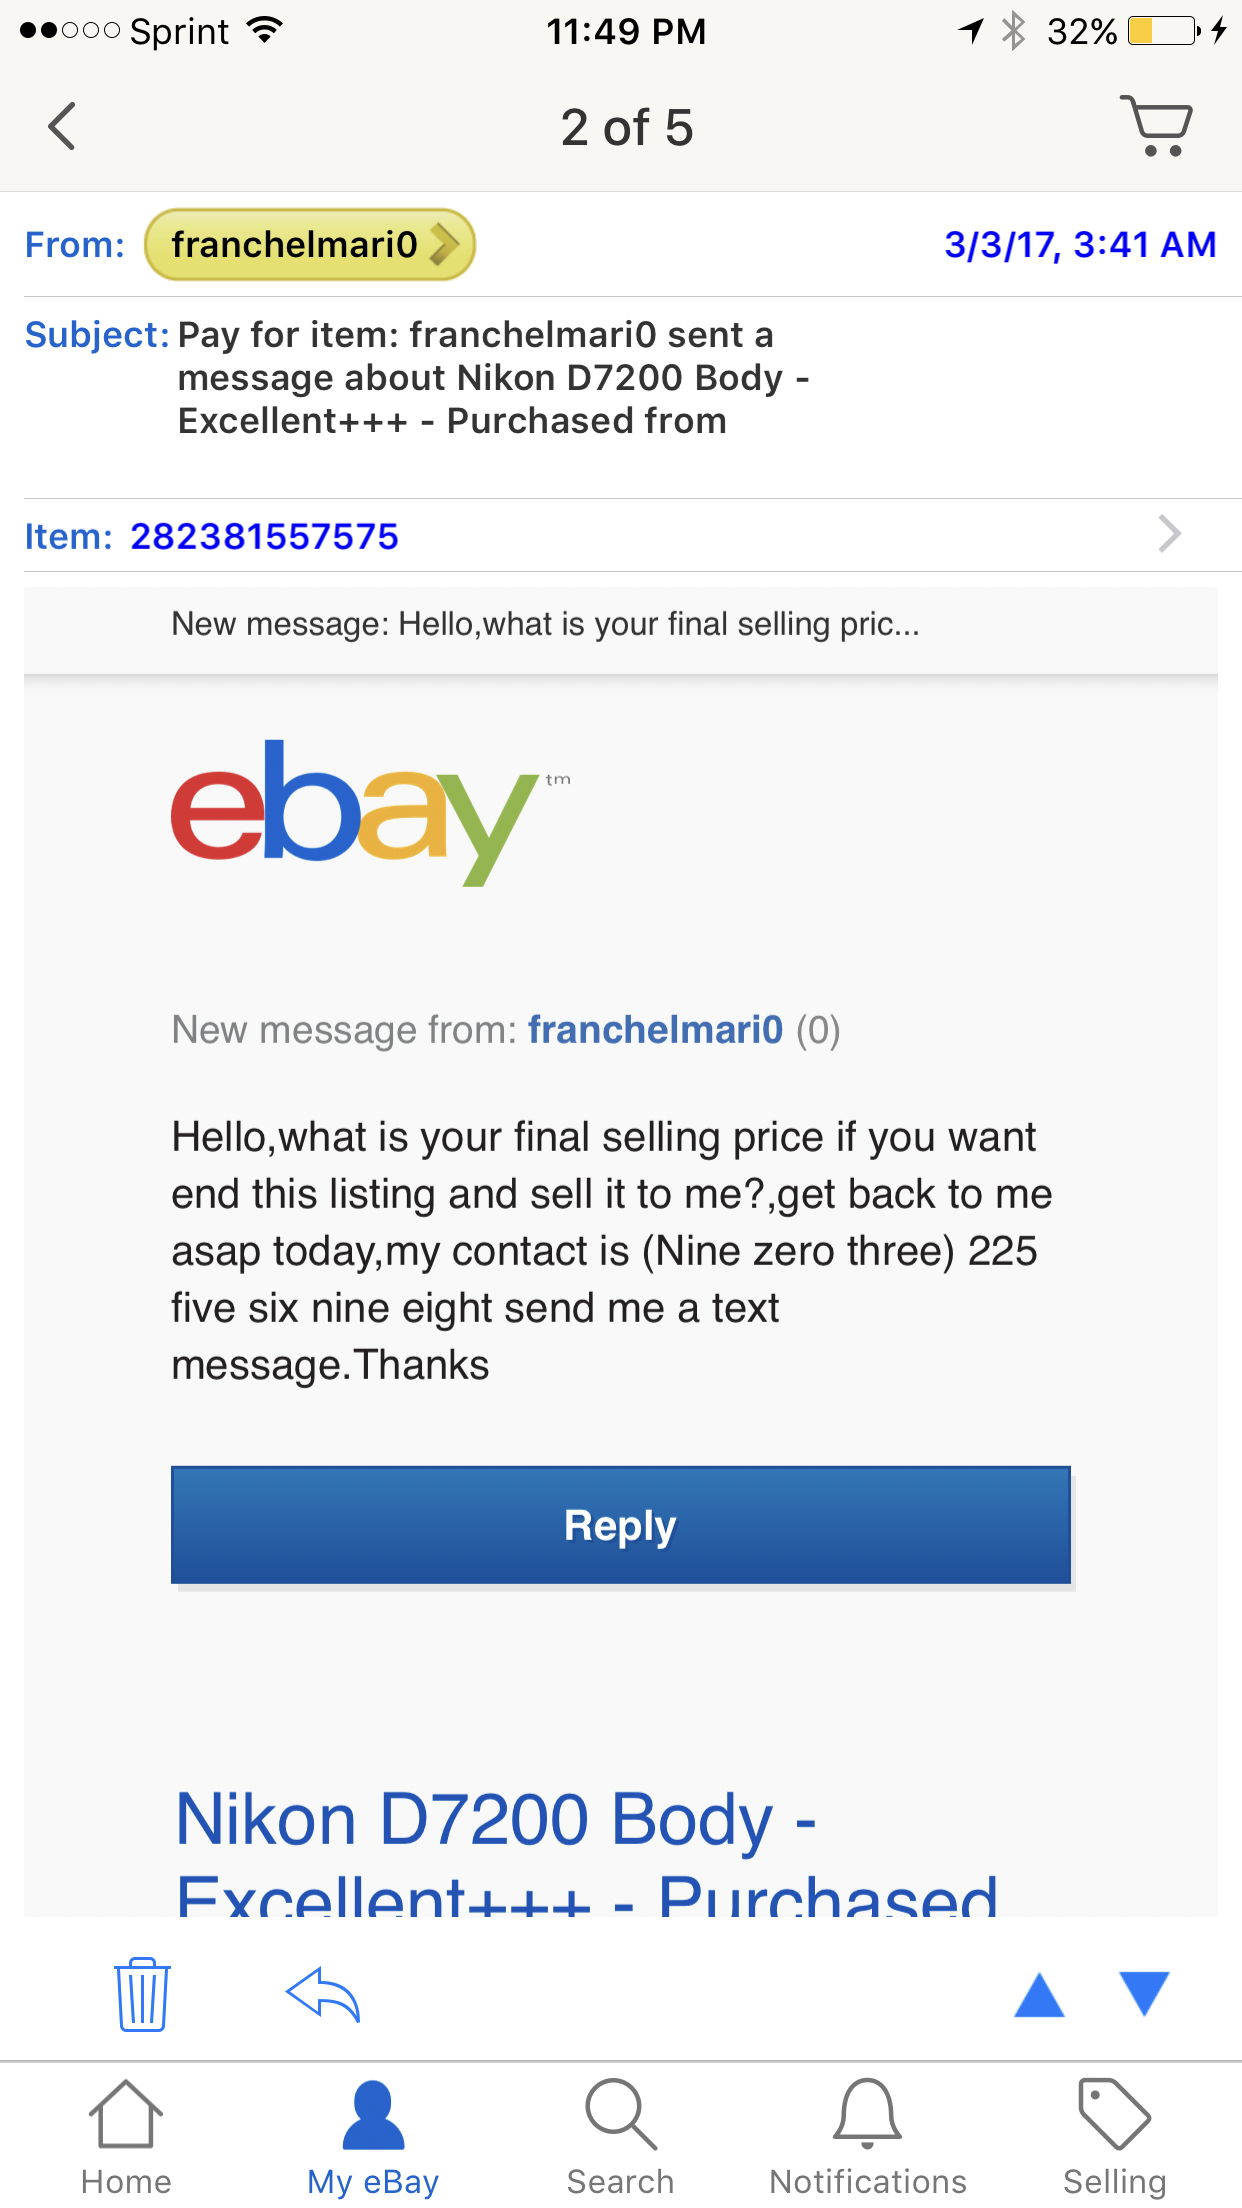 First message sent through eBay... 